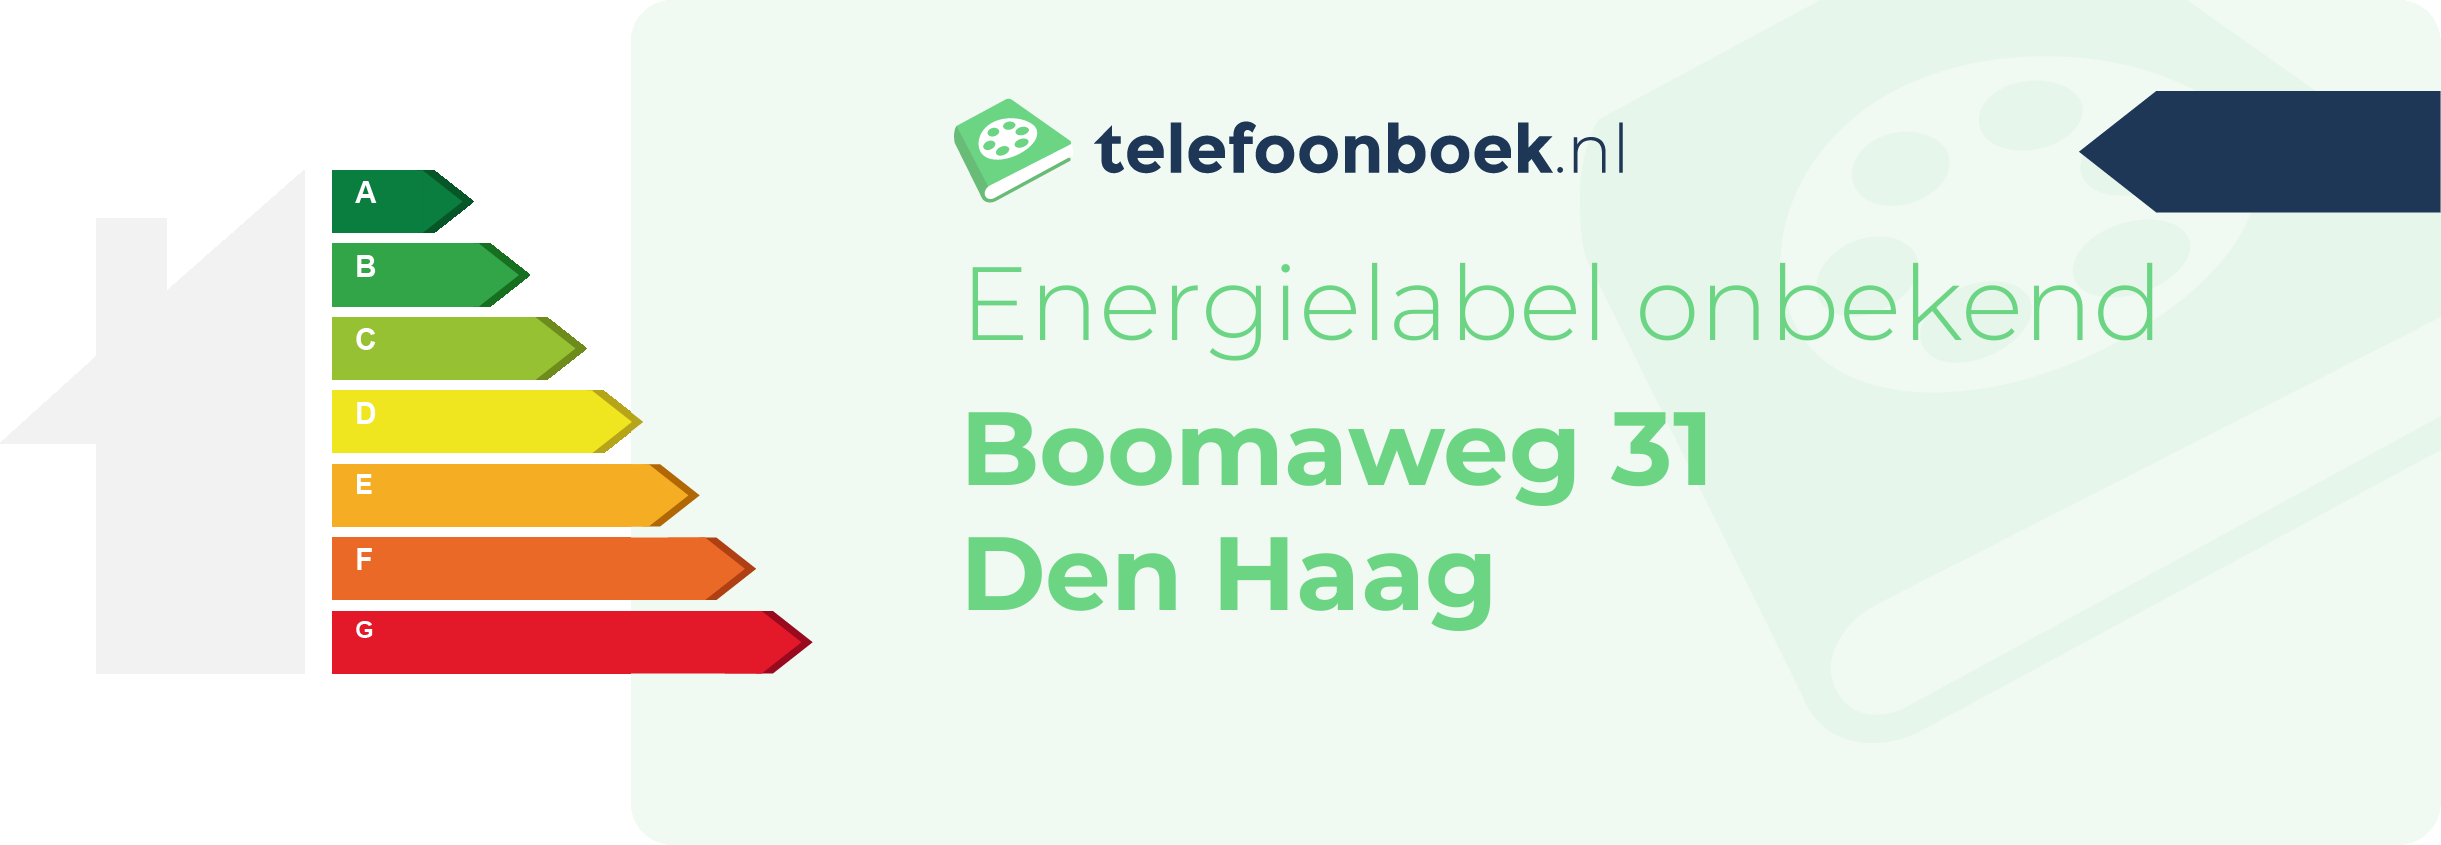 Energielabel Boomaweg 31 Den Haag